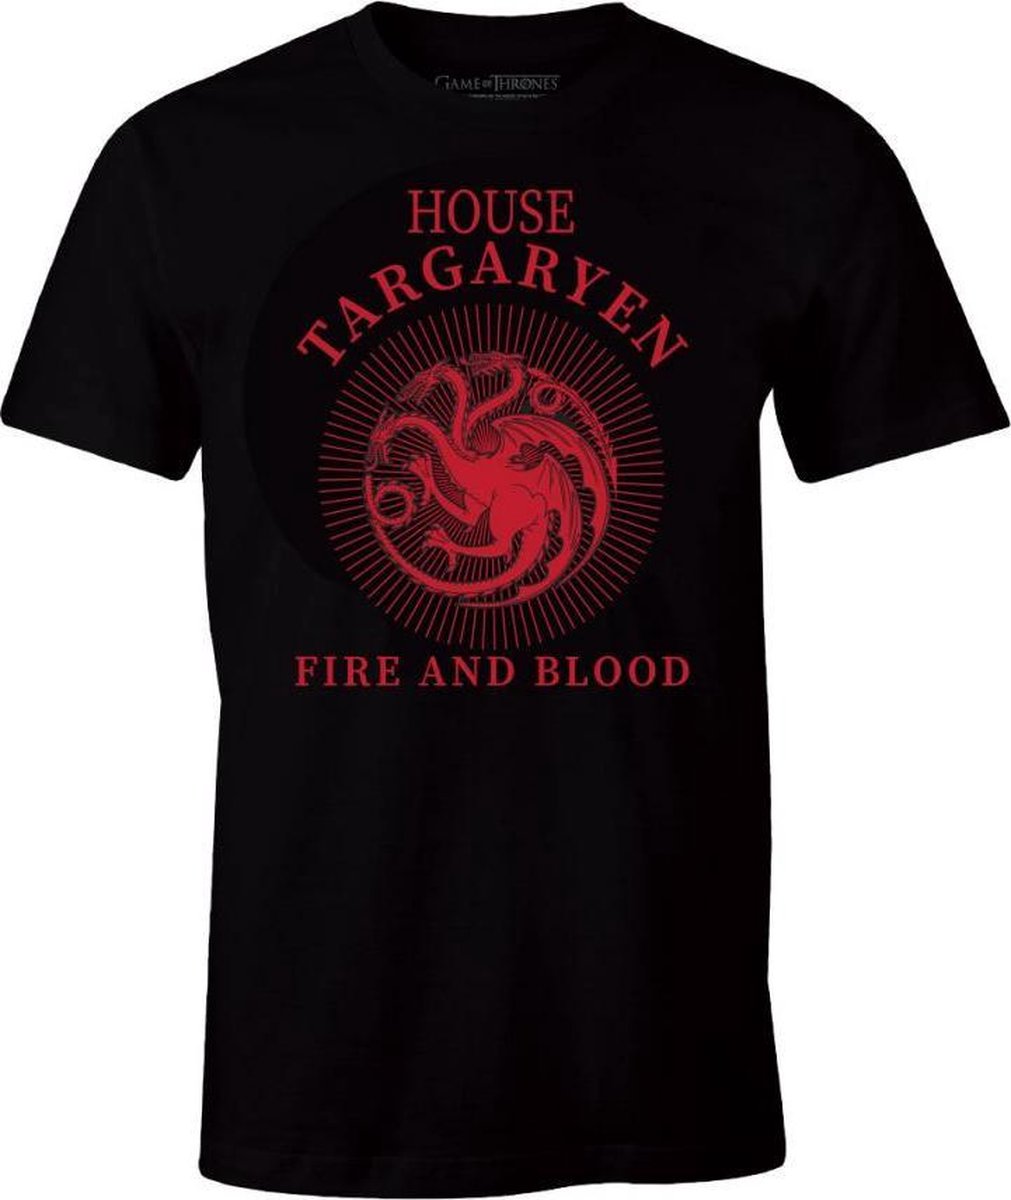 Game of Thrones - Targaryen House Black T-Shirt L